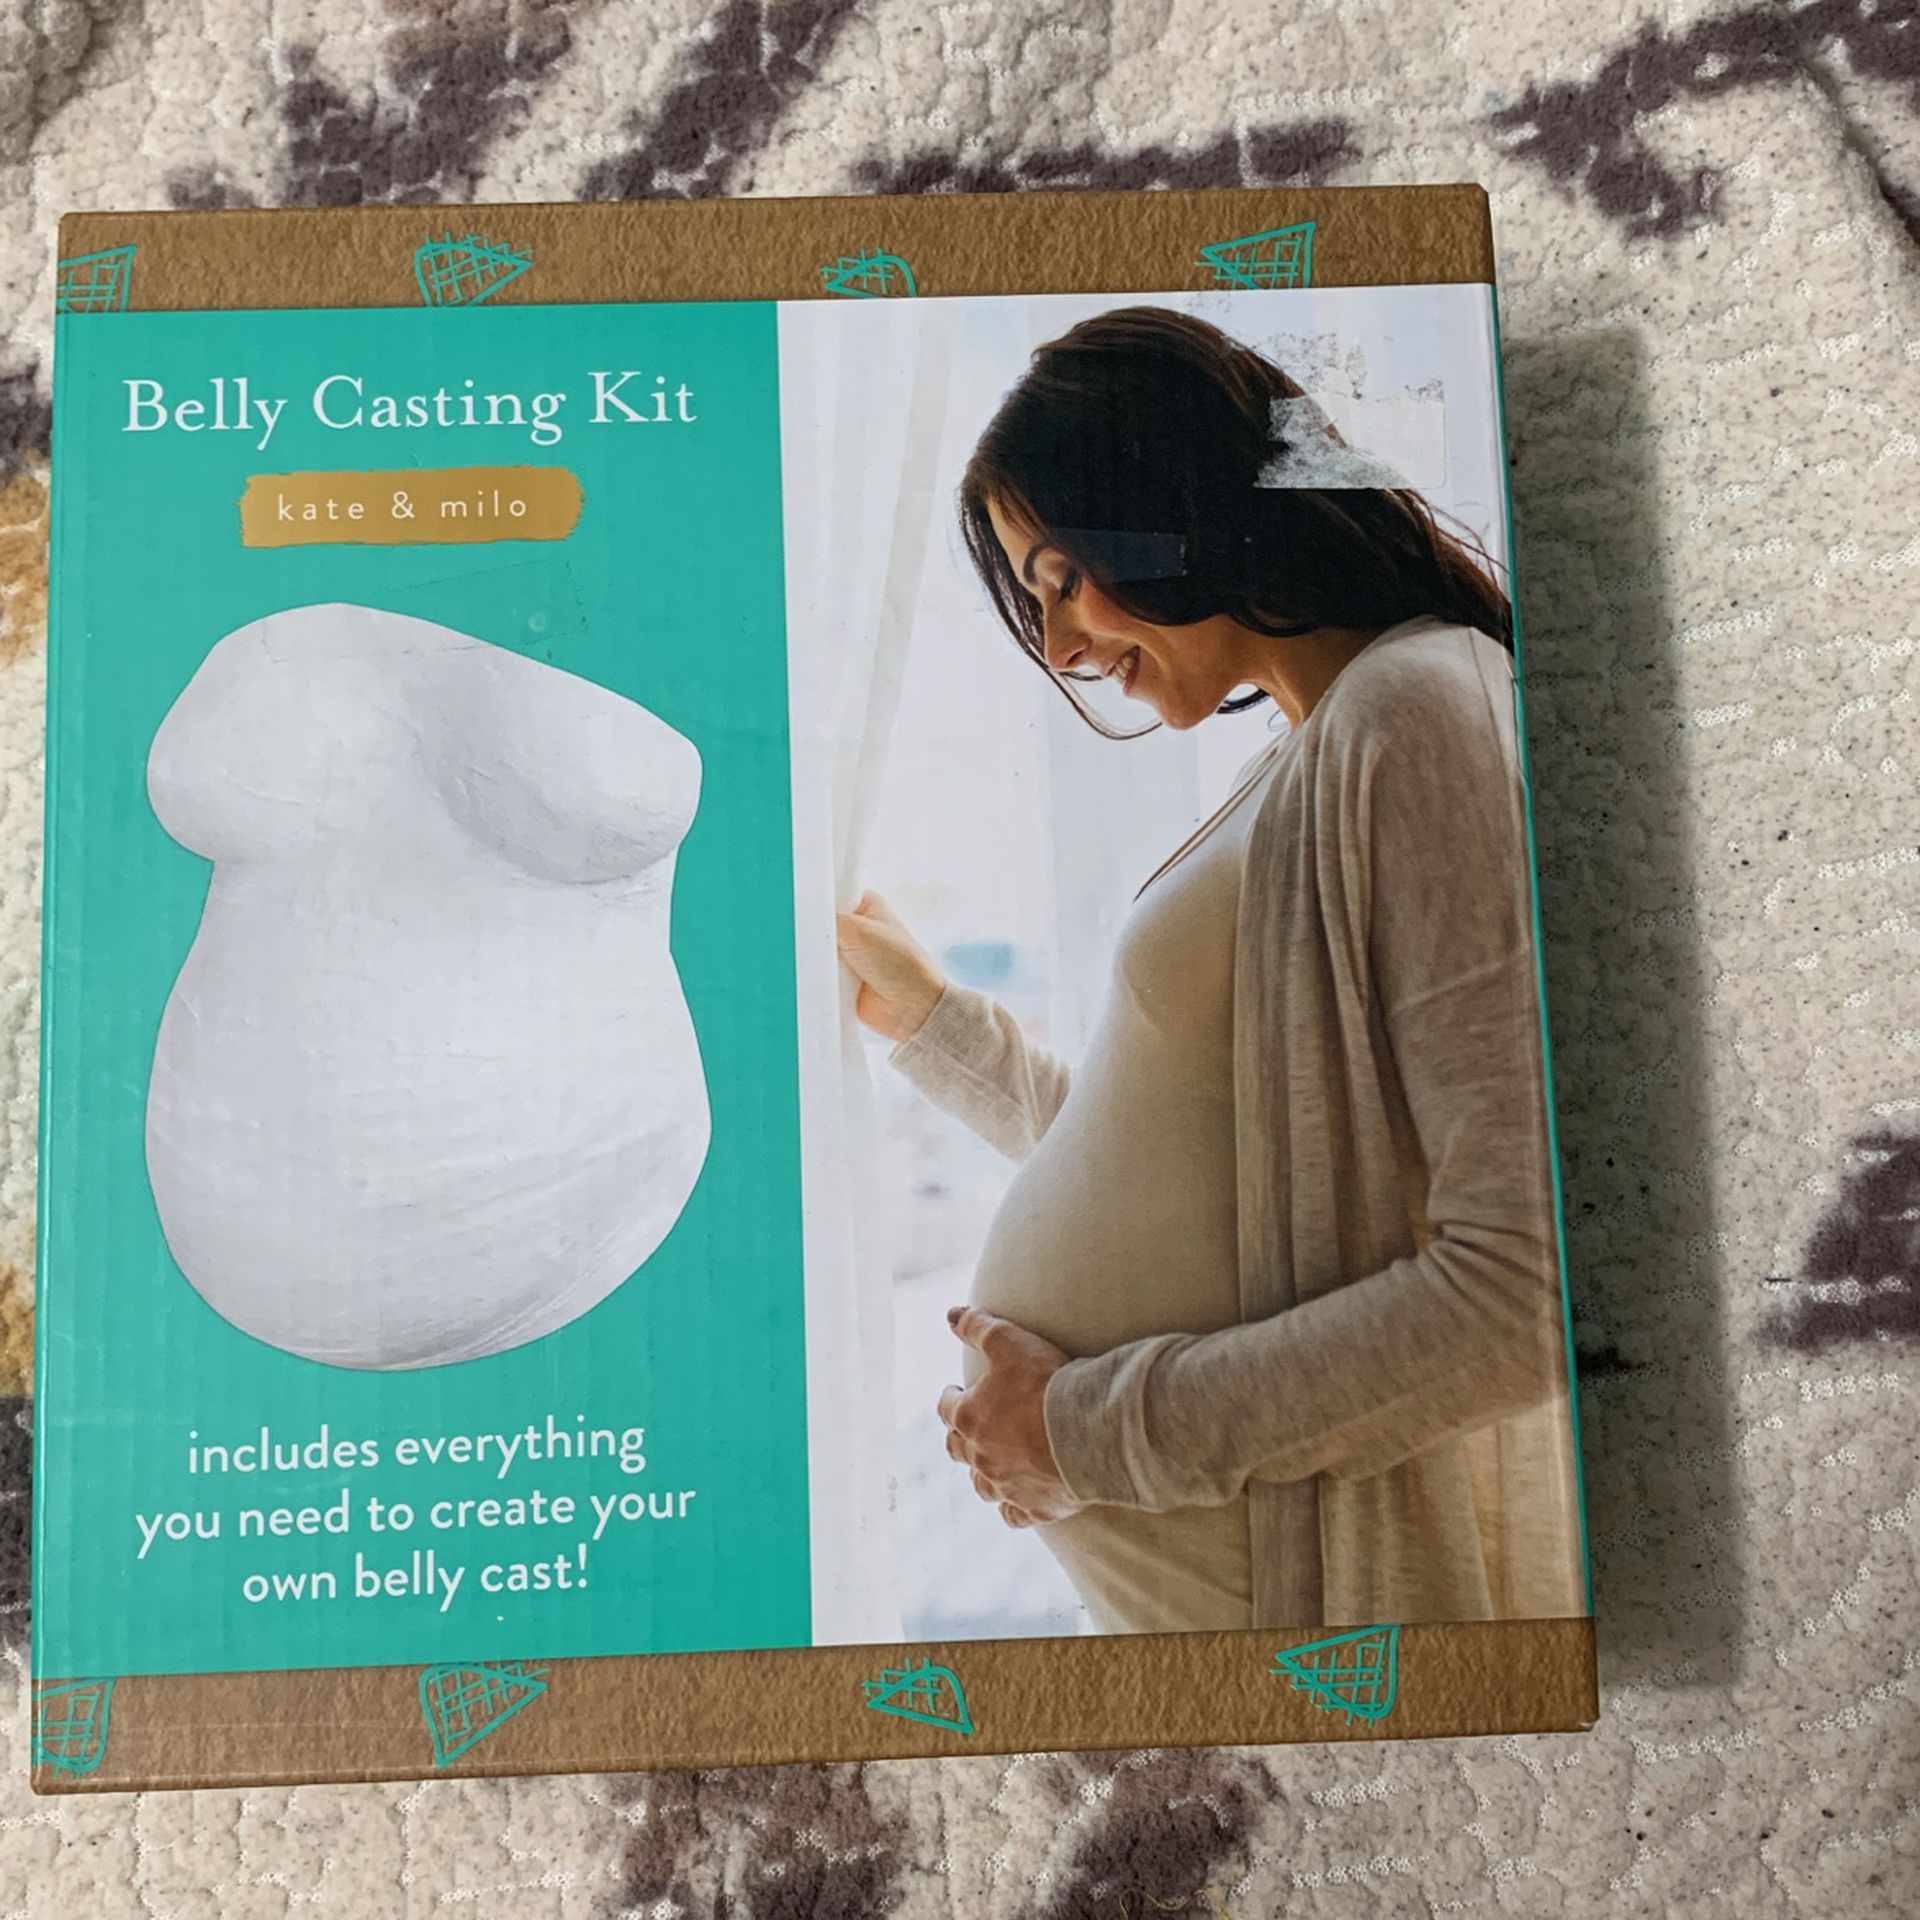 Belly Casting Kit